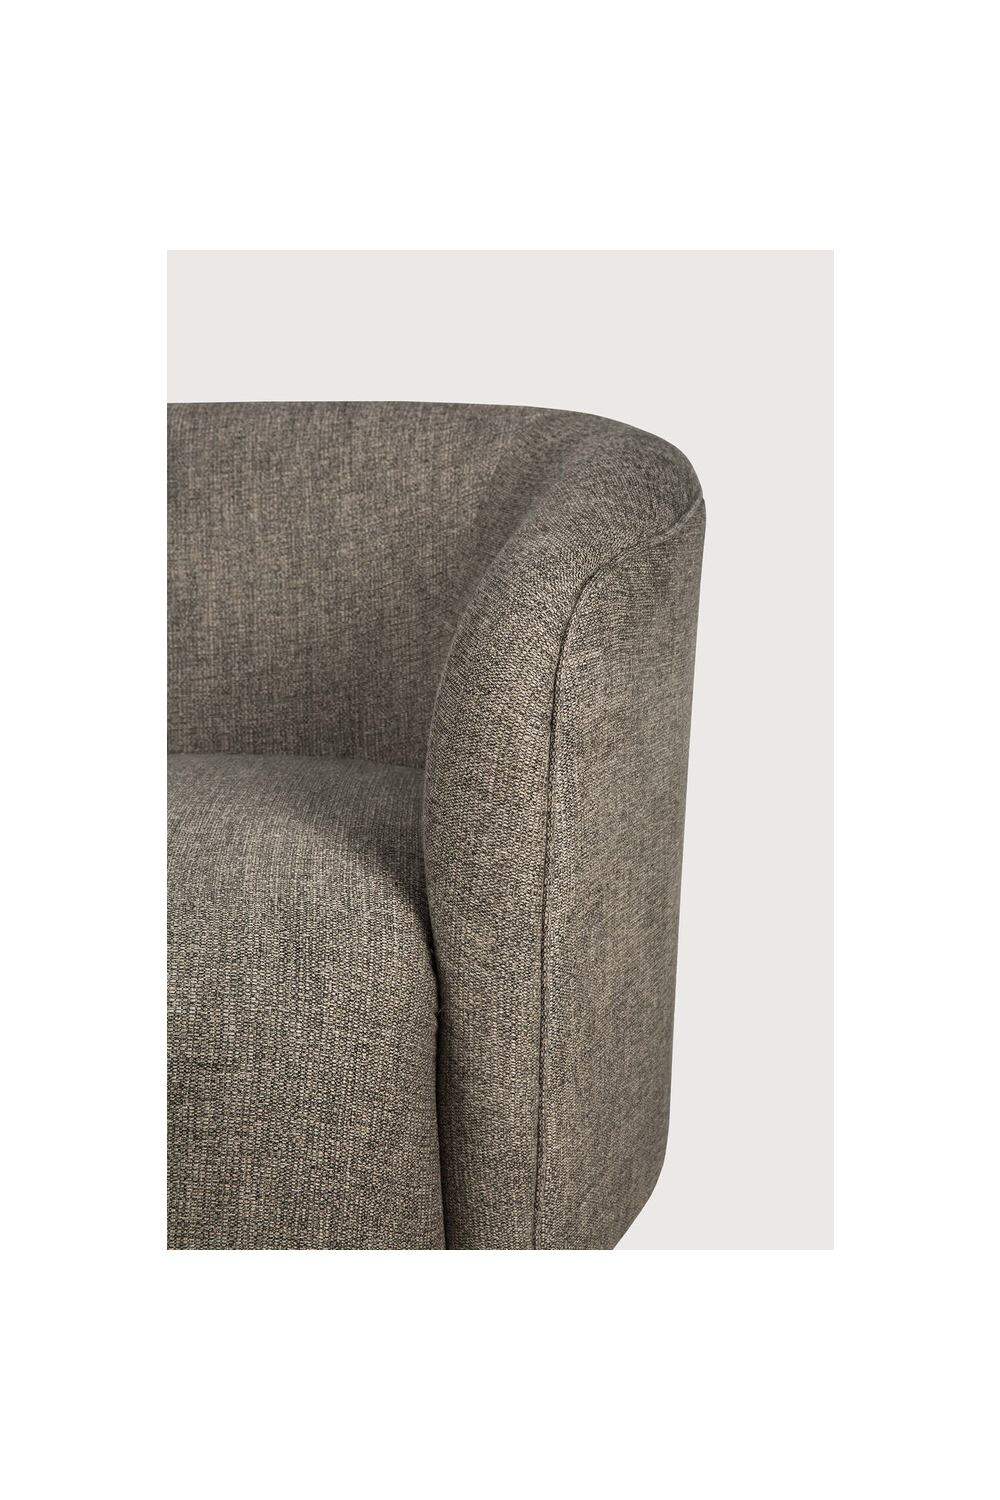 Curved Back 3-Seater Sofa | Ethnicraft Ellipse | Oroatrade.com